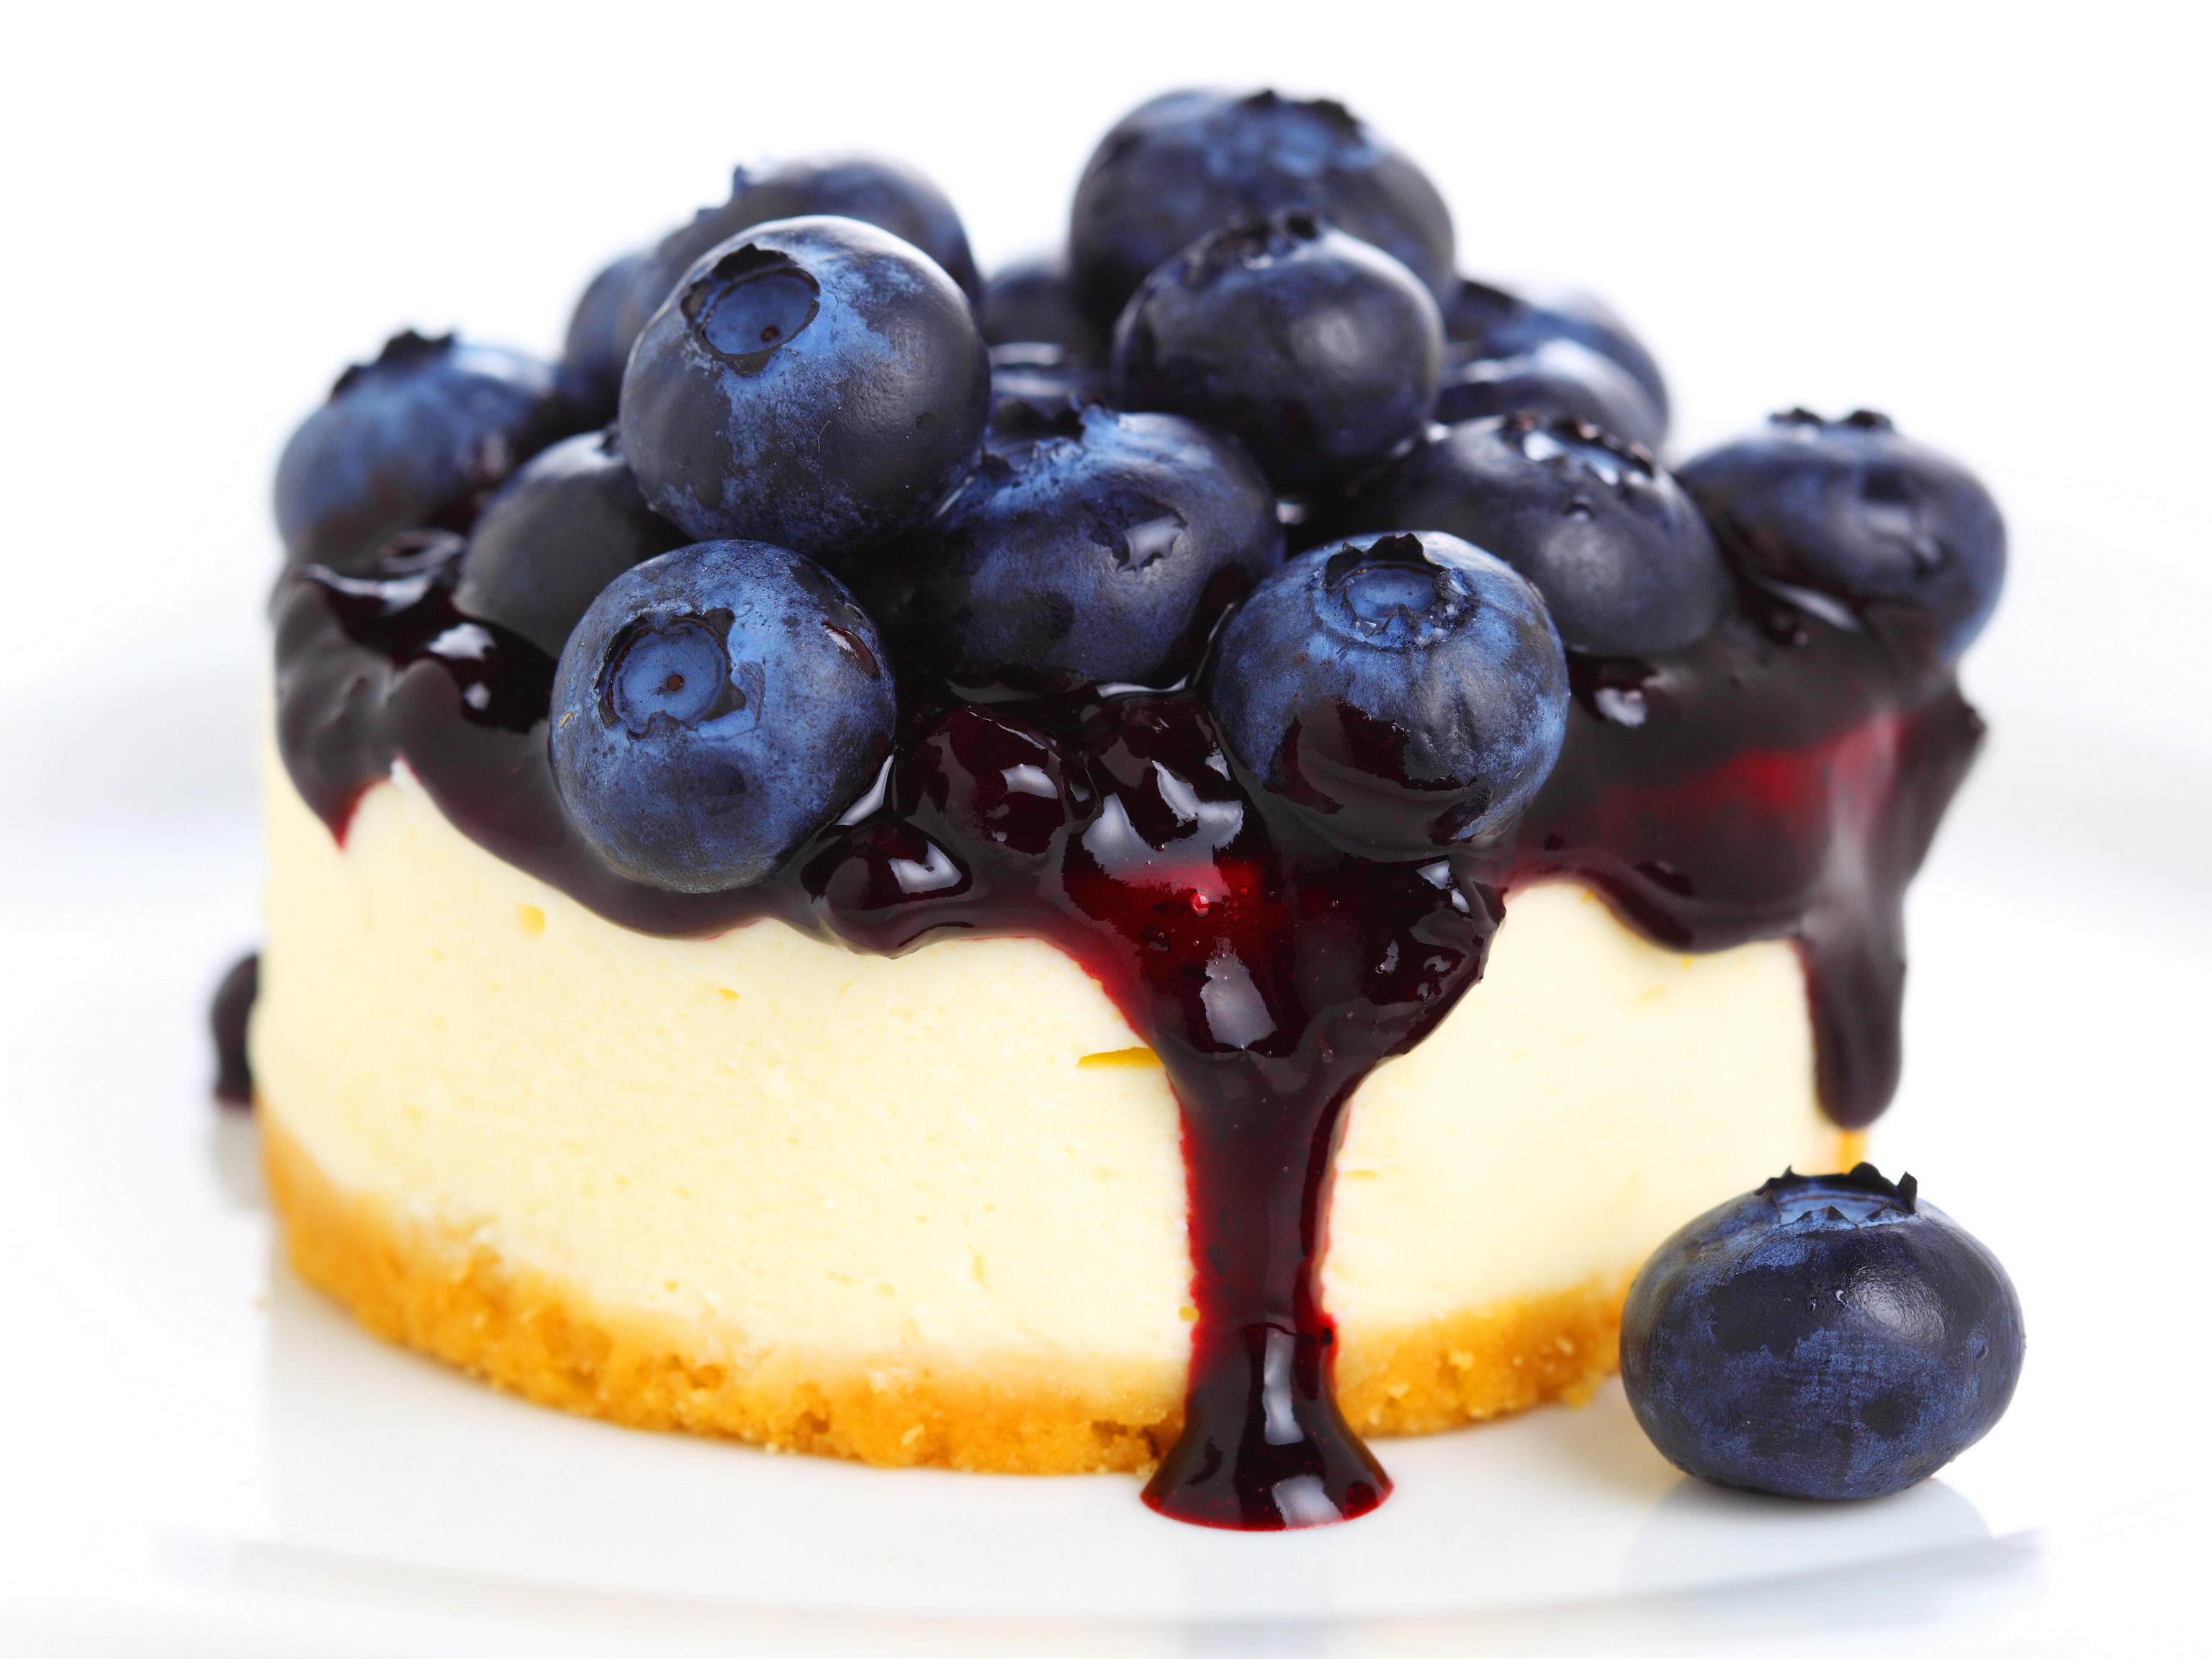 Wallpaper Dessert Cake Blueberries Pie Cheesecake Jam